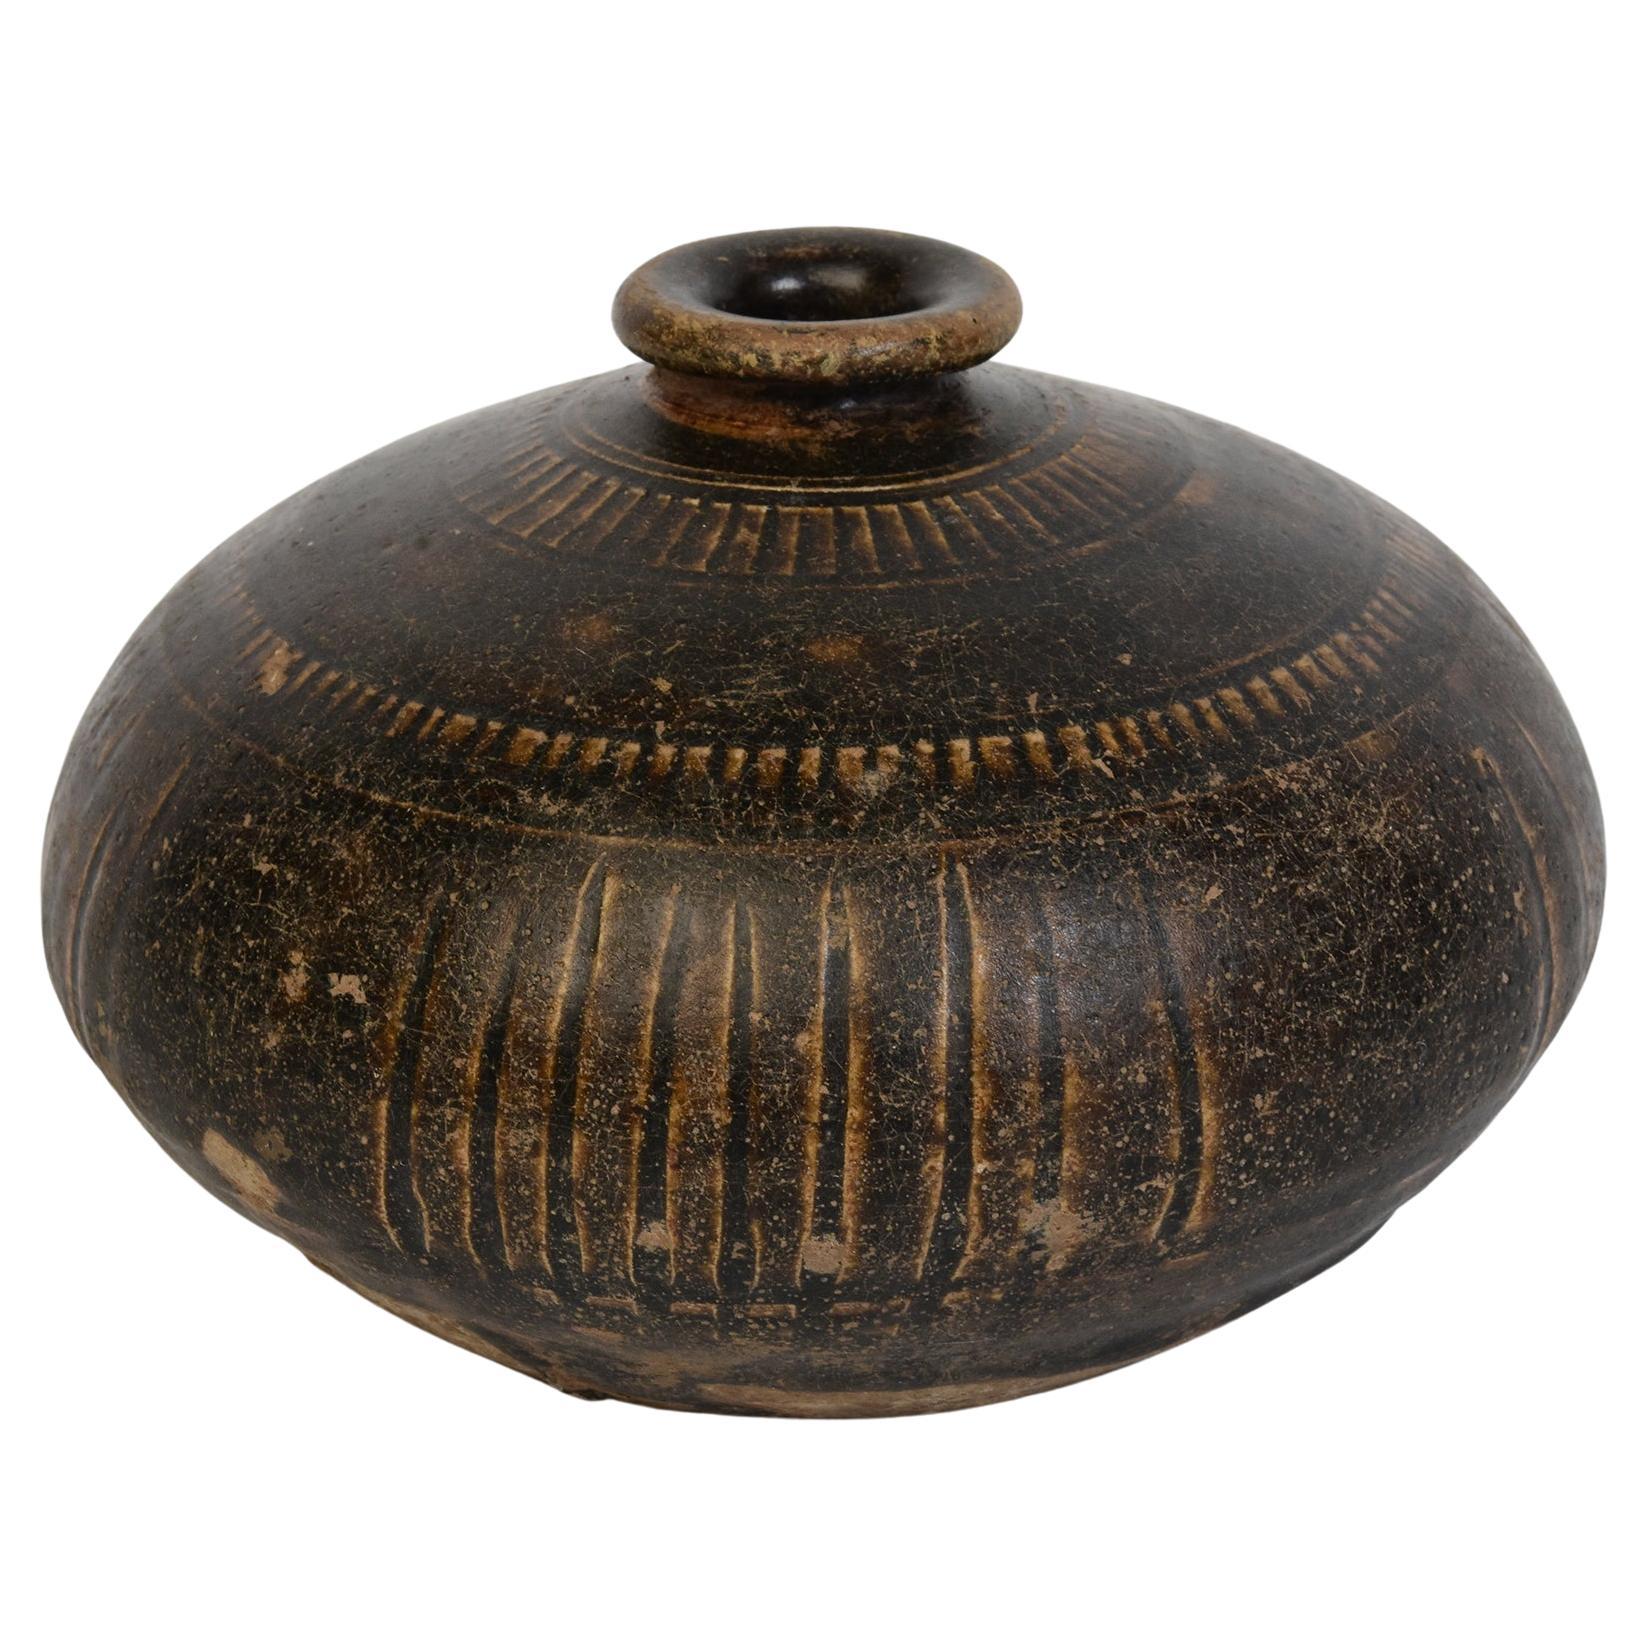 12. bis 13. Jahrhundert, Bayon, antiker Khmer-Honigtopf aus dunkelbraun glasierter Keramik